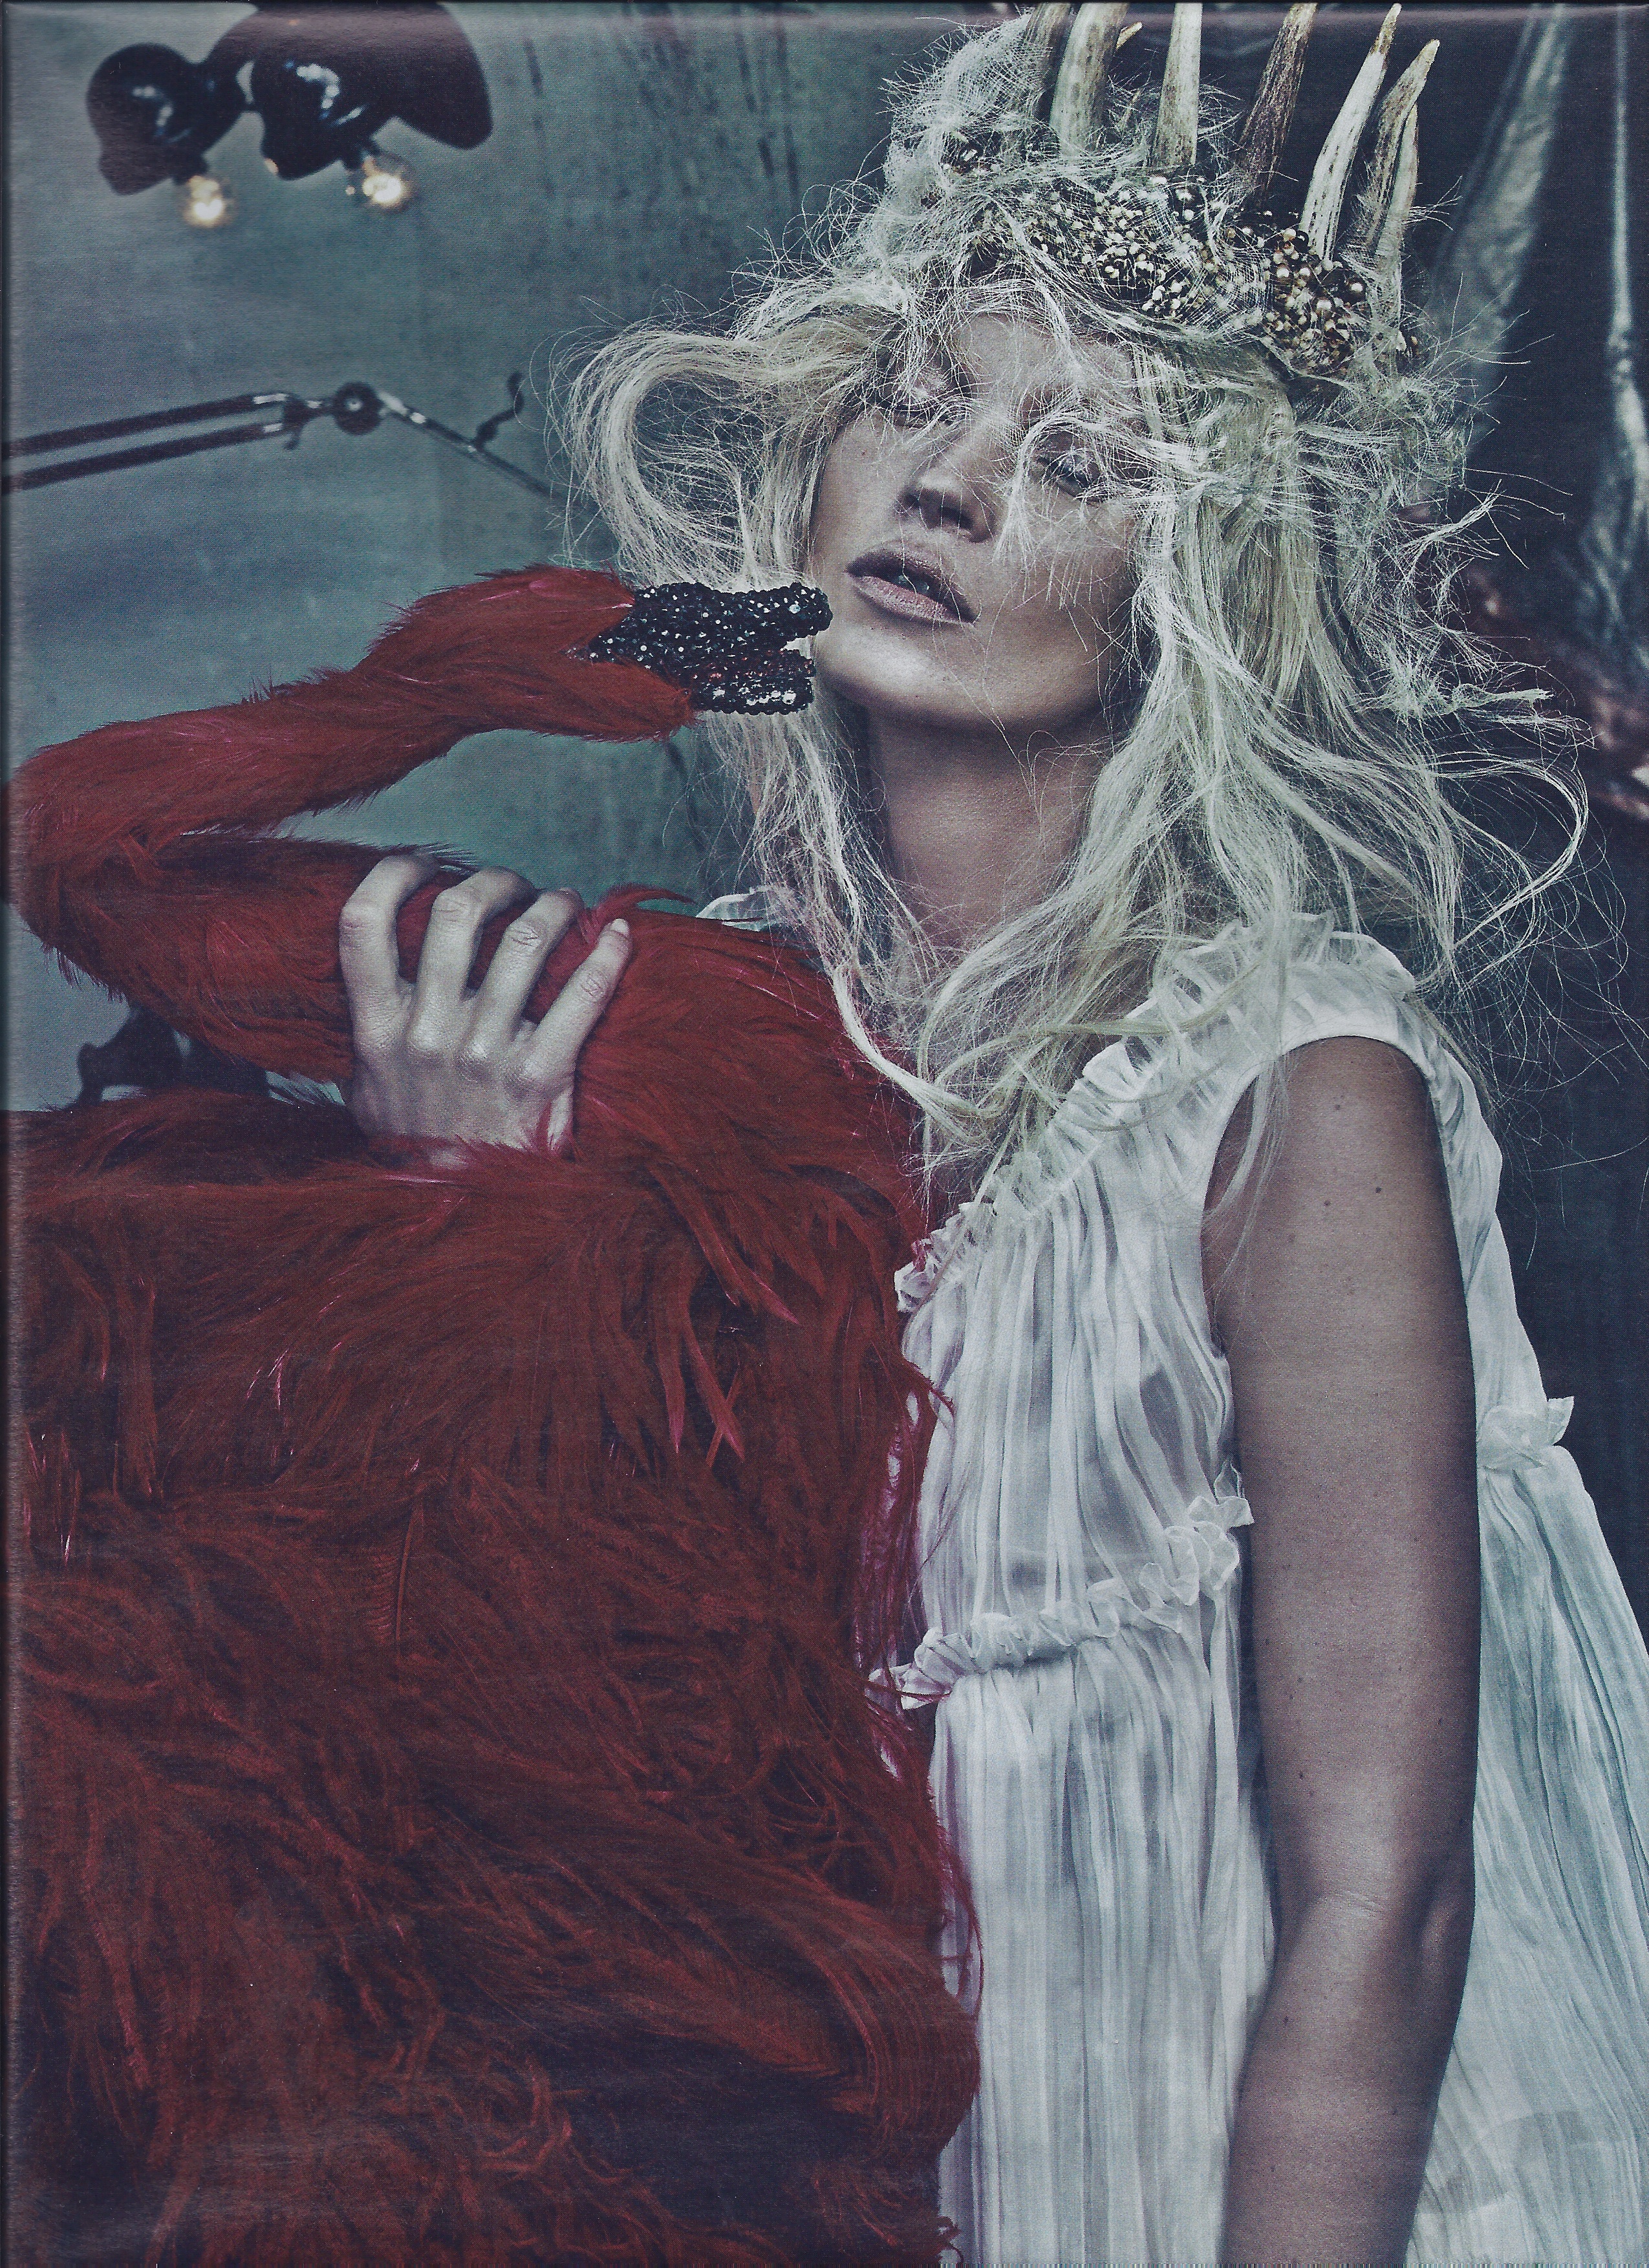 Kate Moss: "W" Magazine, March 2012